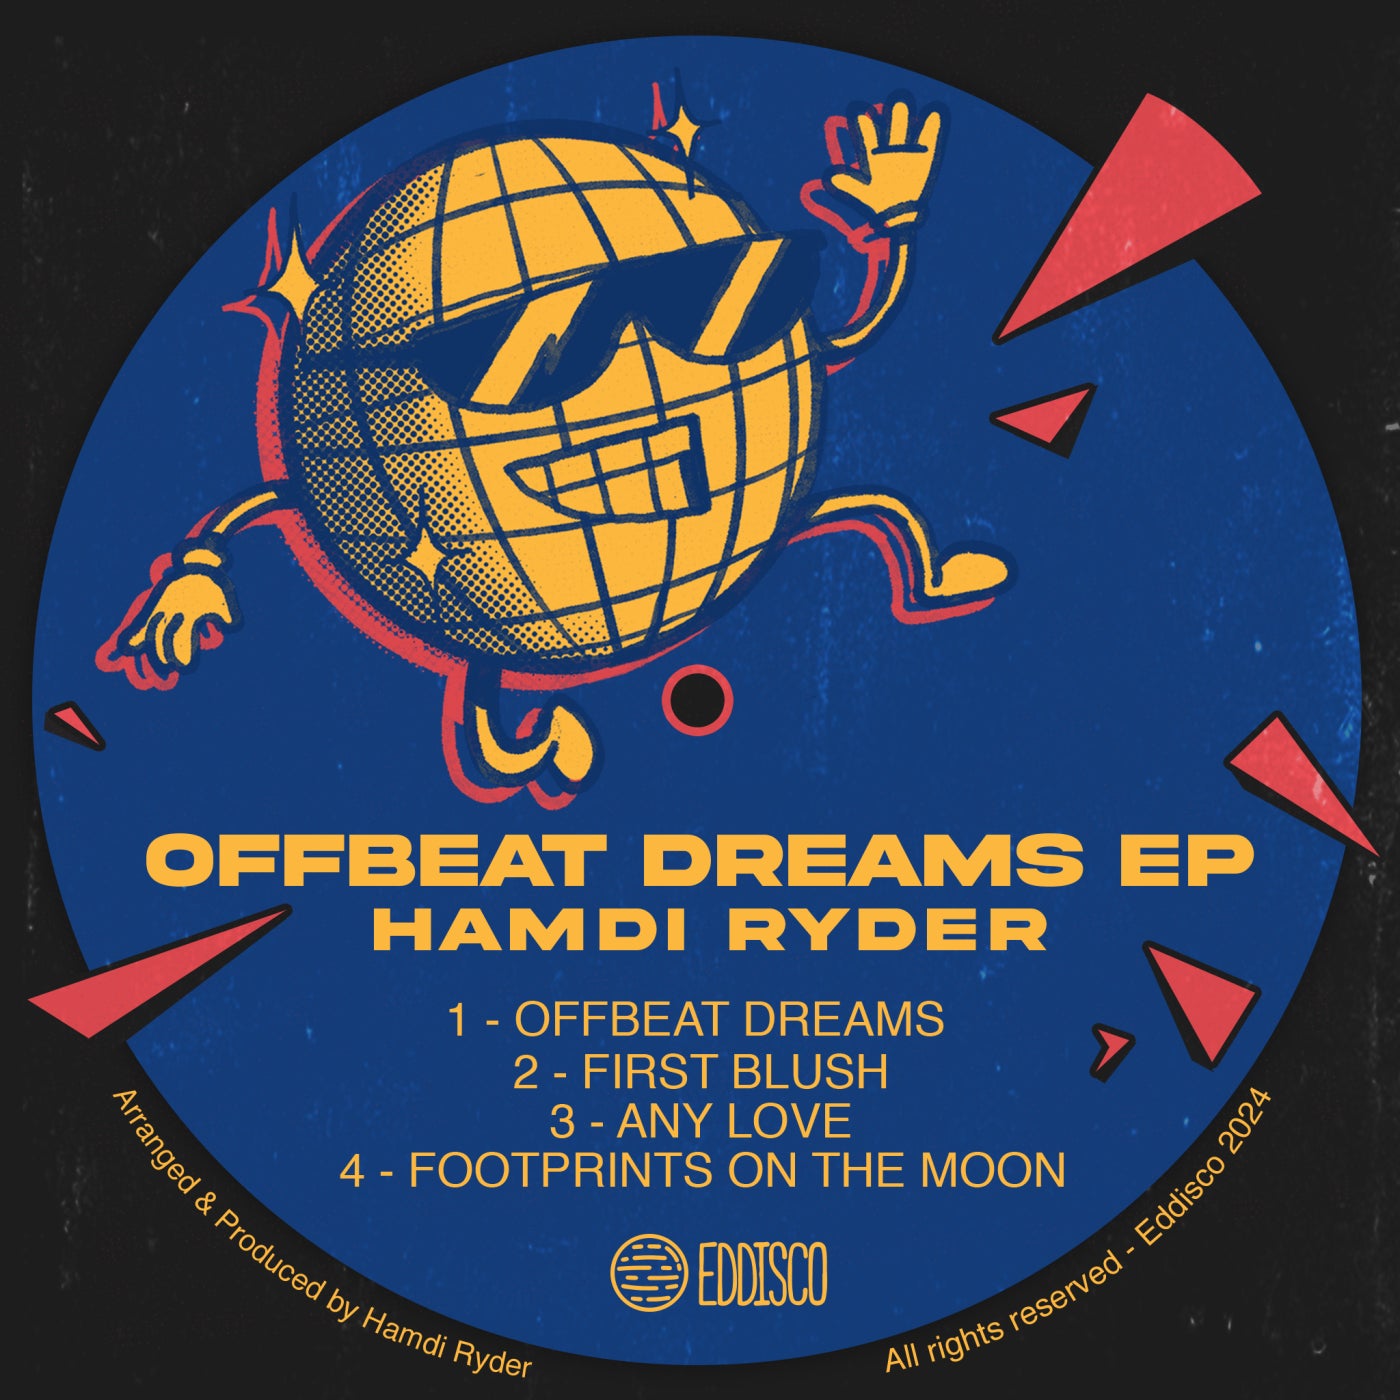 Offbeat Dreams EP